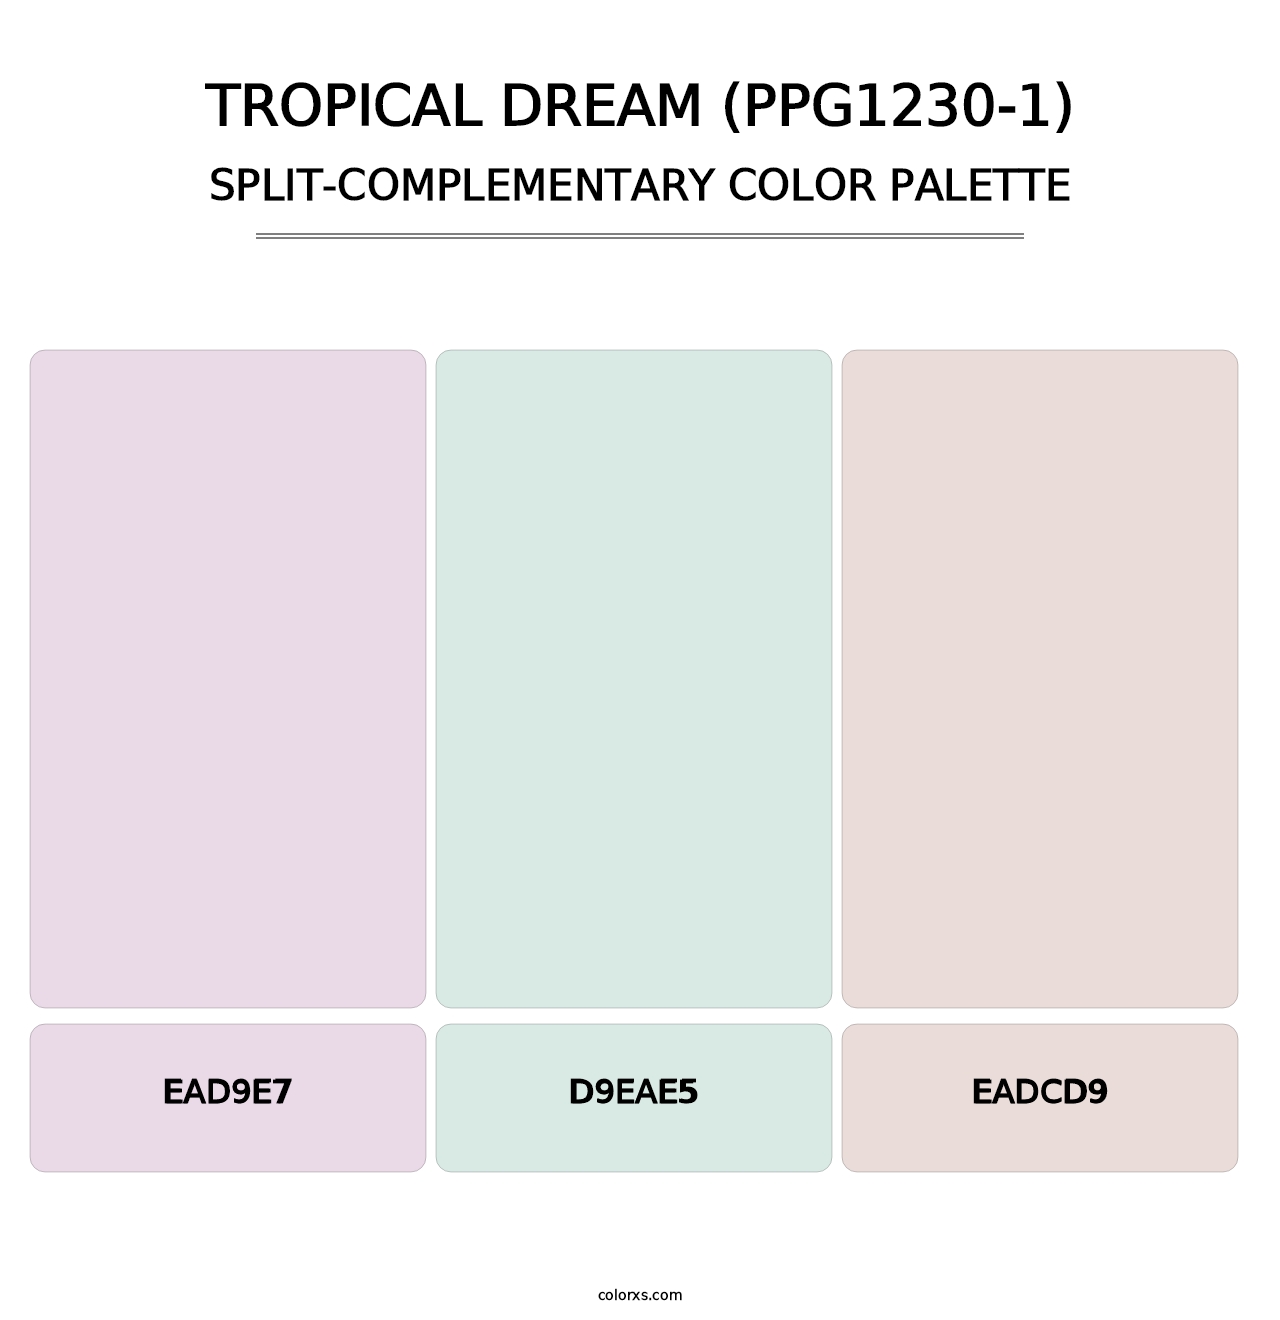 Tropical Dream (PPG1230-1) - Split-Complementary Color Palette